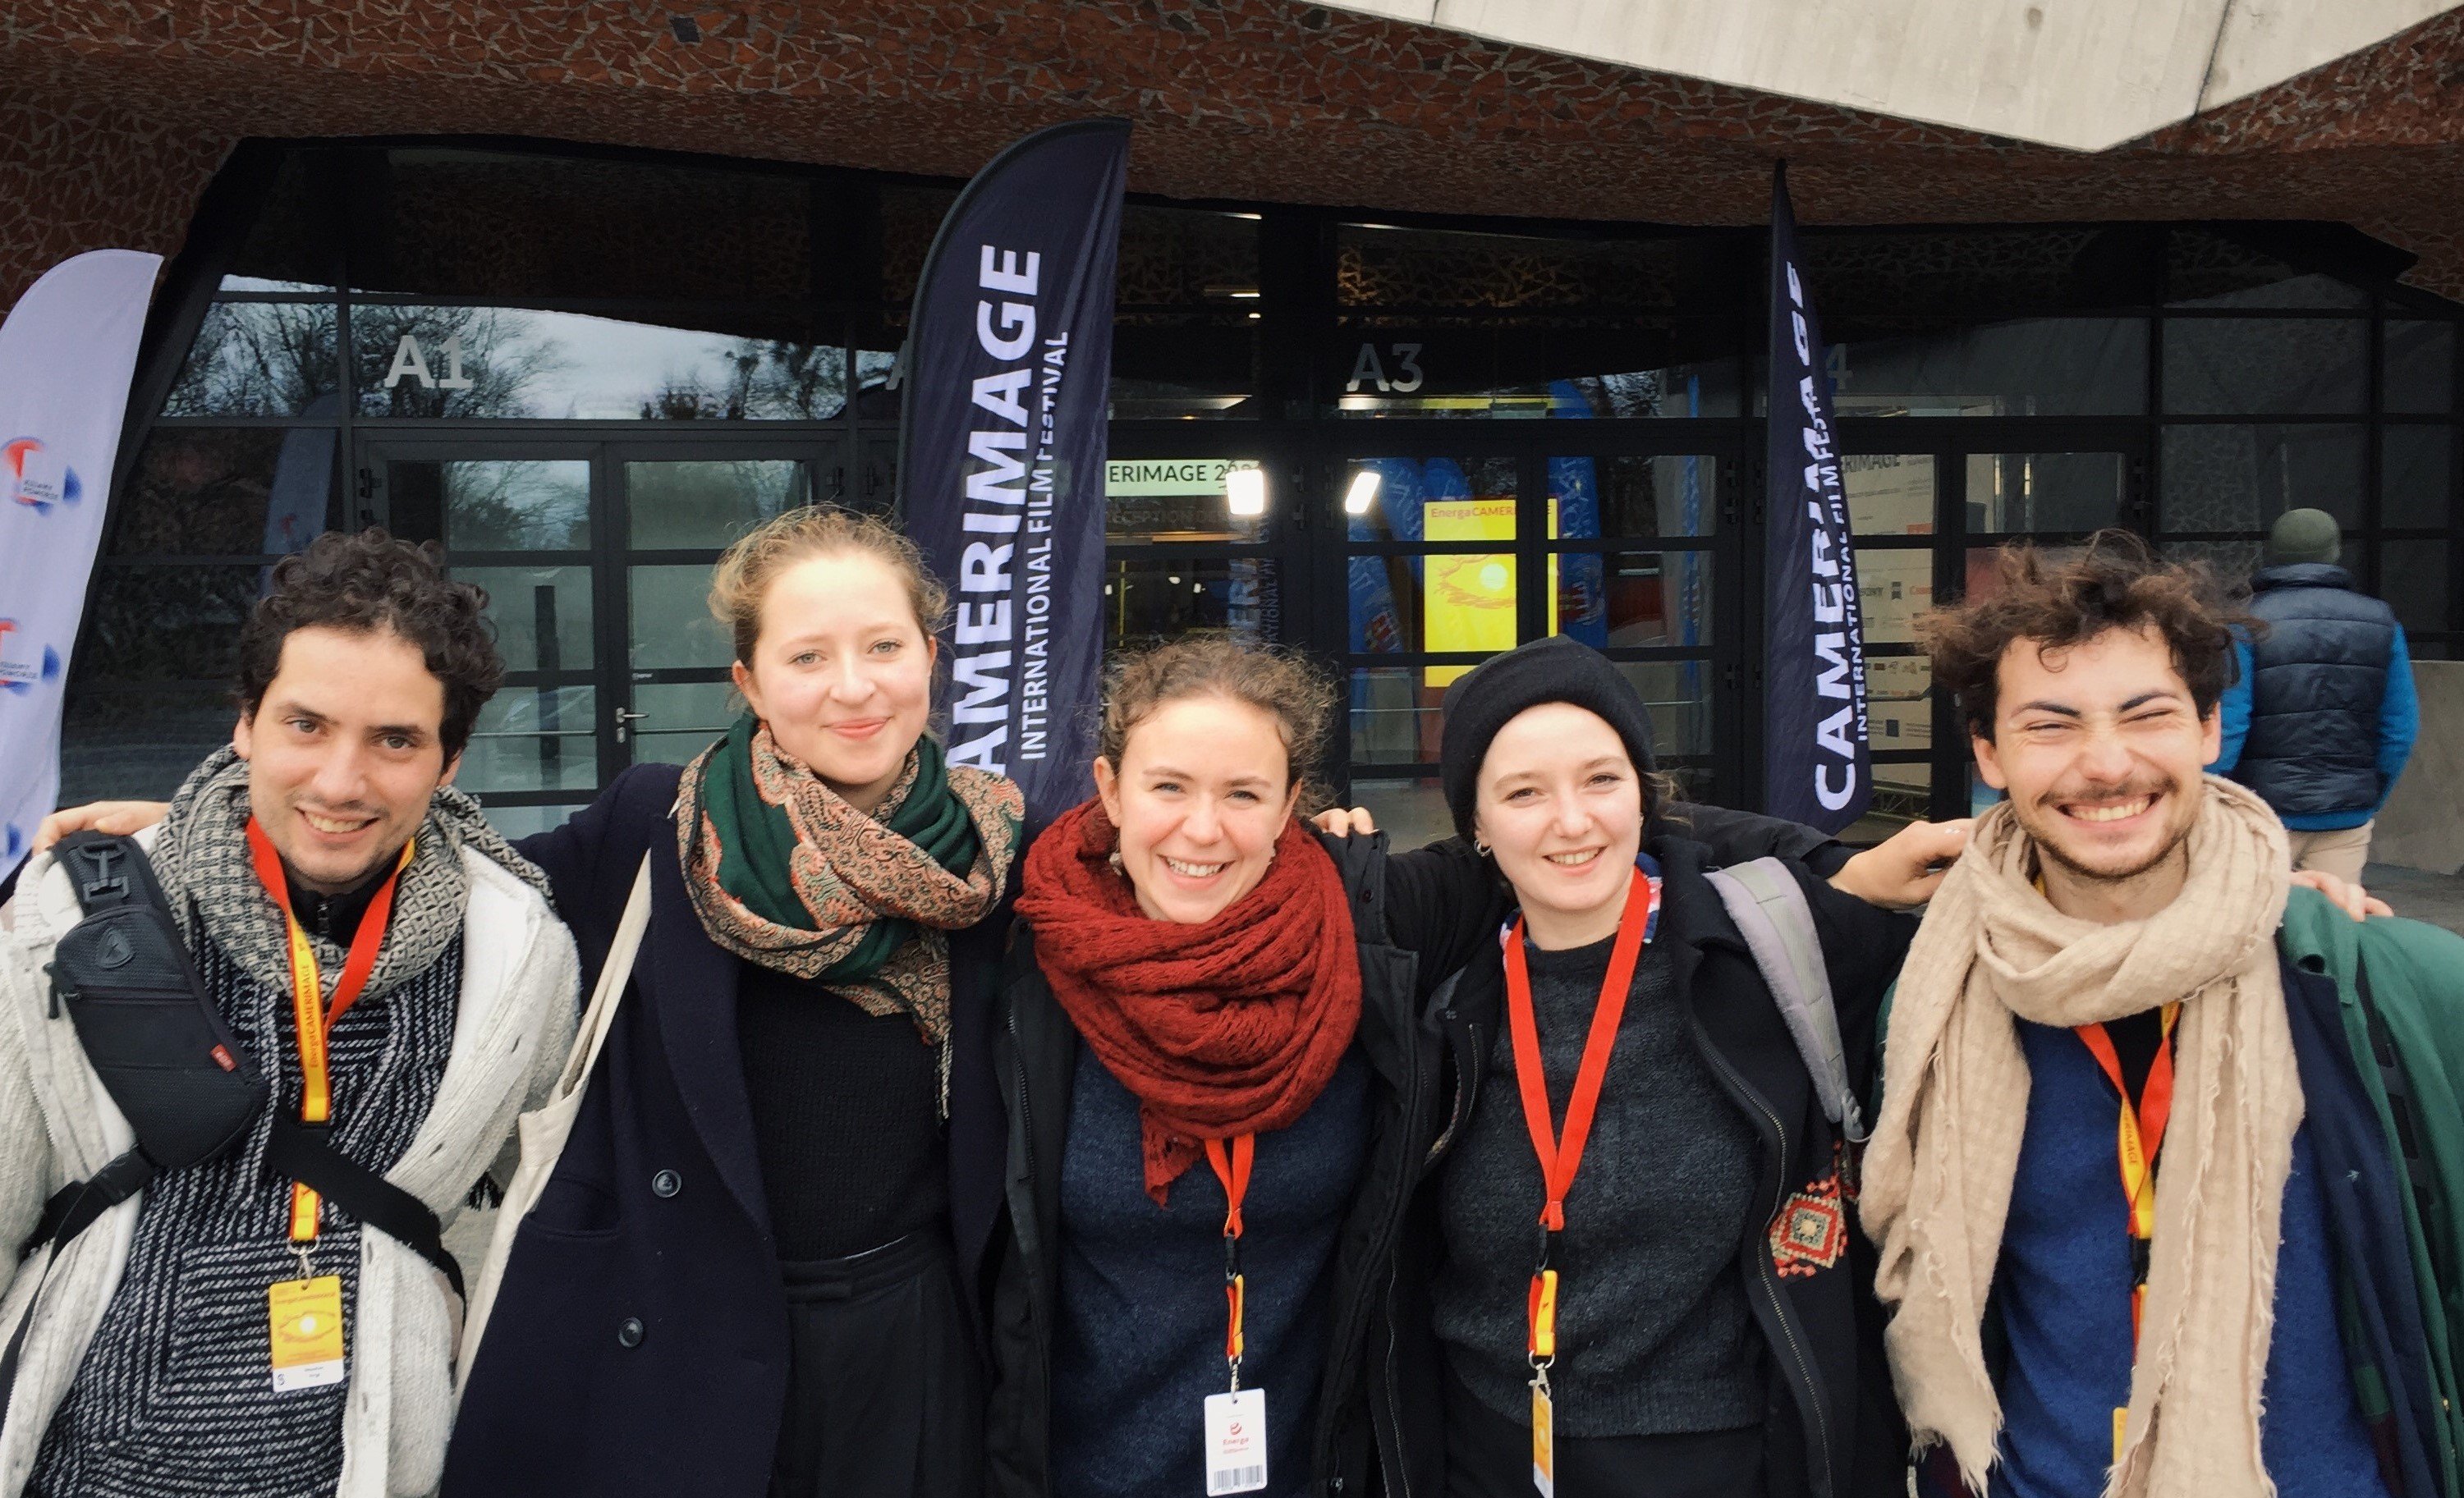 Cinema Students from La Fémis at energa Camerimage 2021